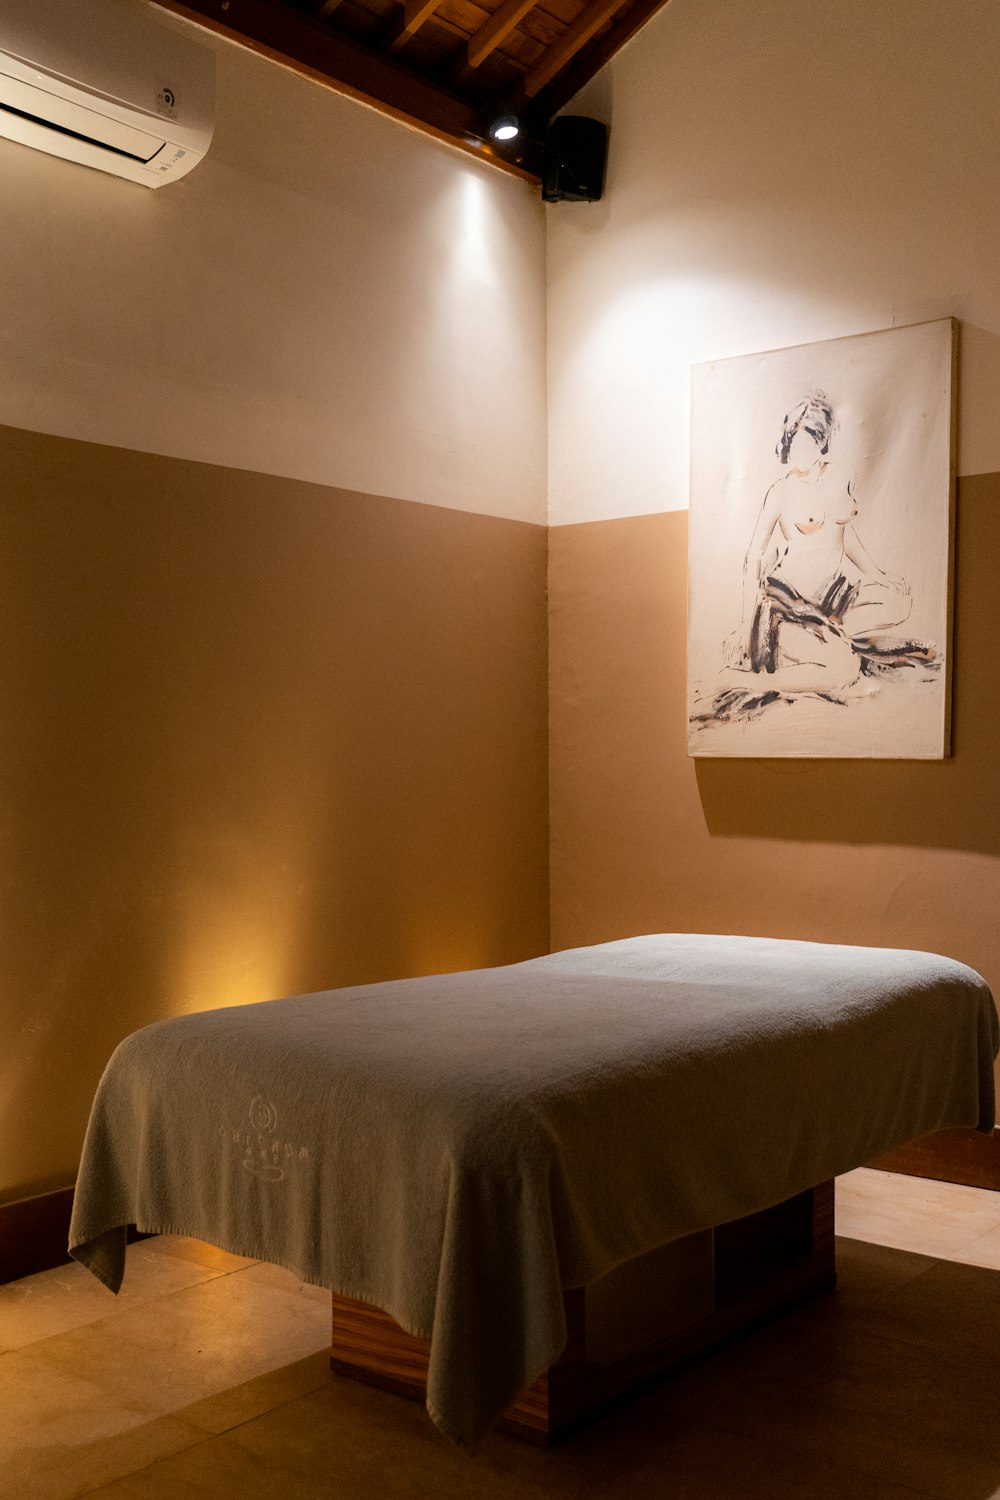 500+ Massage Room Pictures [HD] | Download Free Images on Unsplash